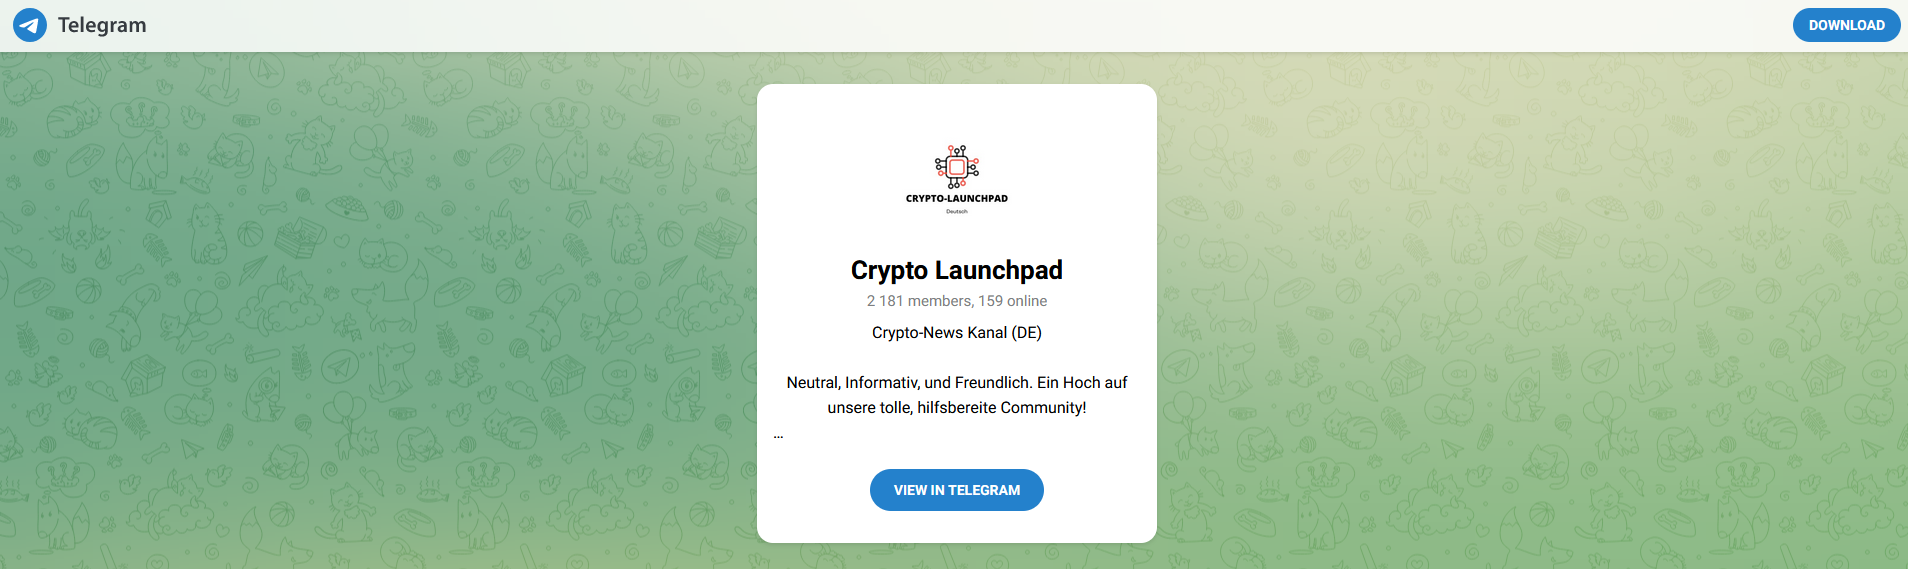 Telegram Gruppe Crypto Launchpad